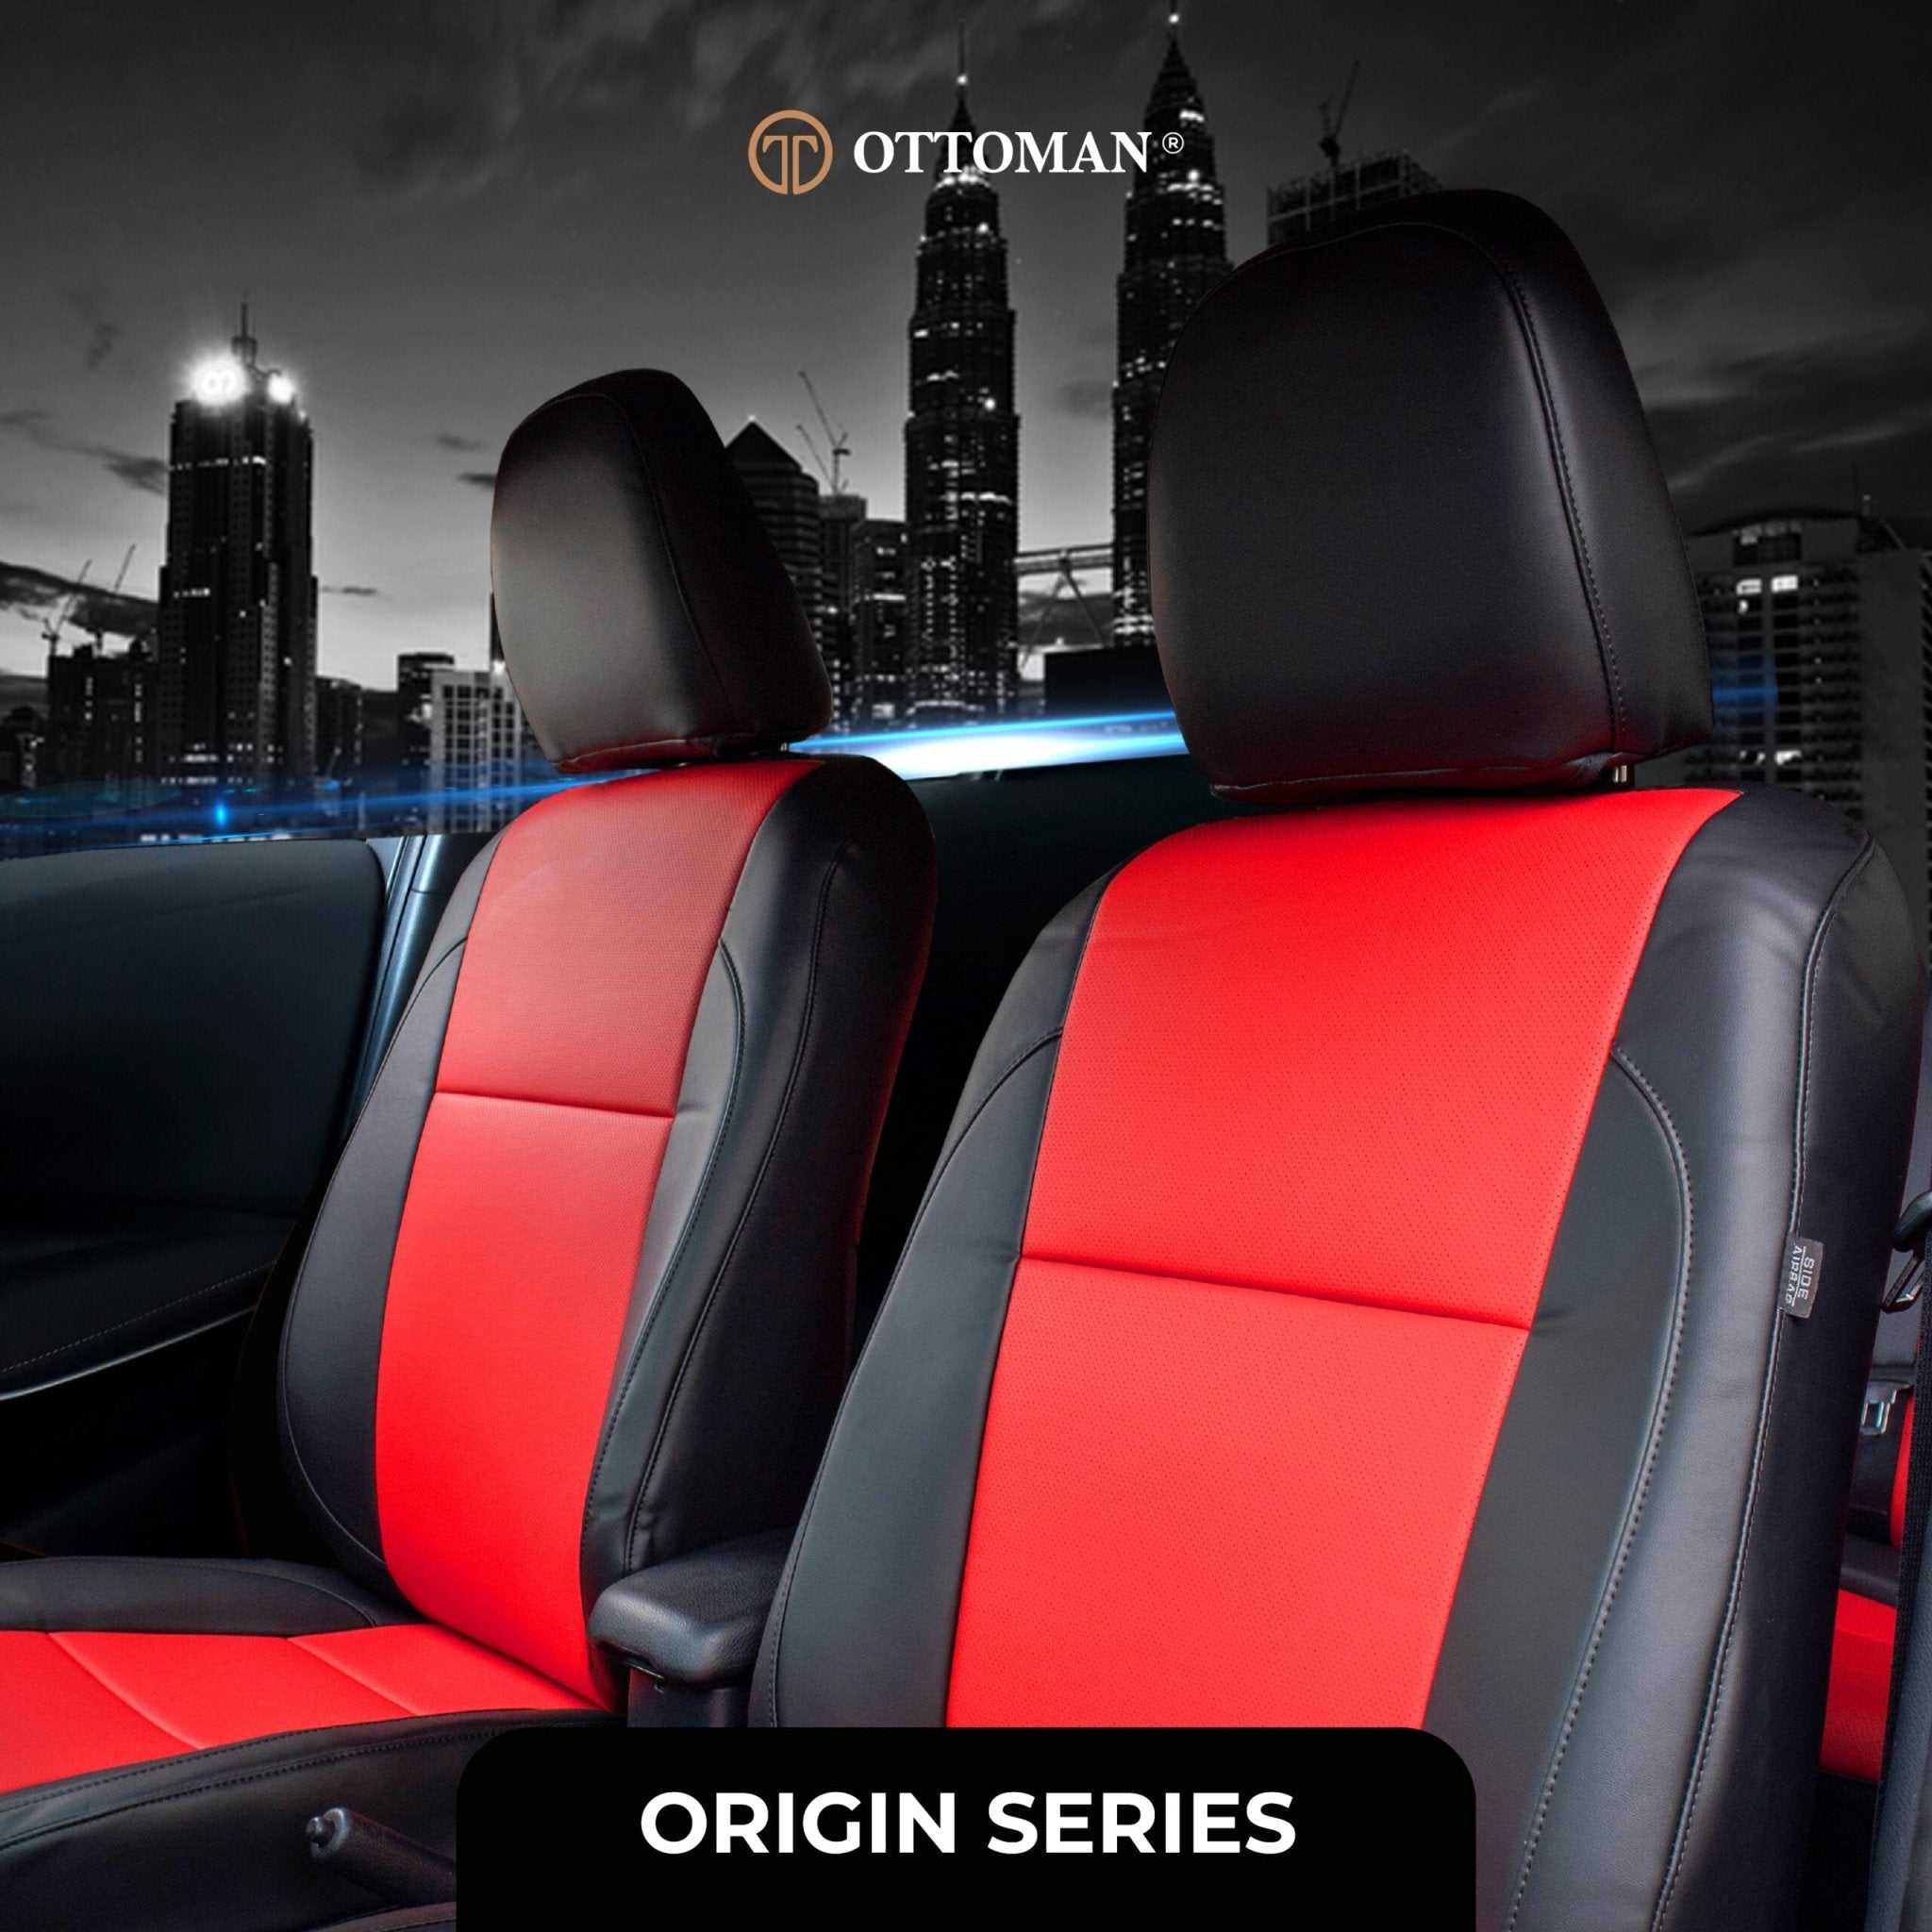 Honda CRV (2012-2016) Ottoman Seat Cover Seat Cover in Klang Selangor, Penang, Johor Bahru - Ottoman Car Mats